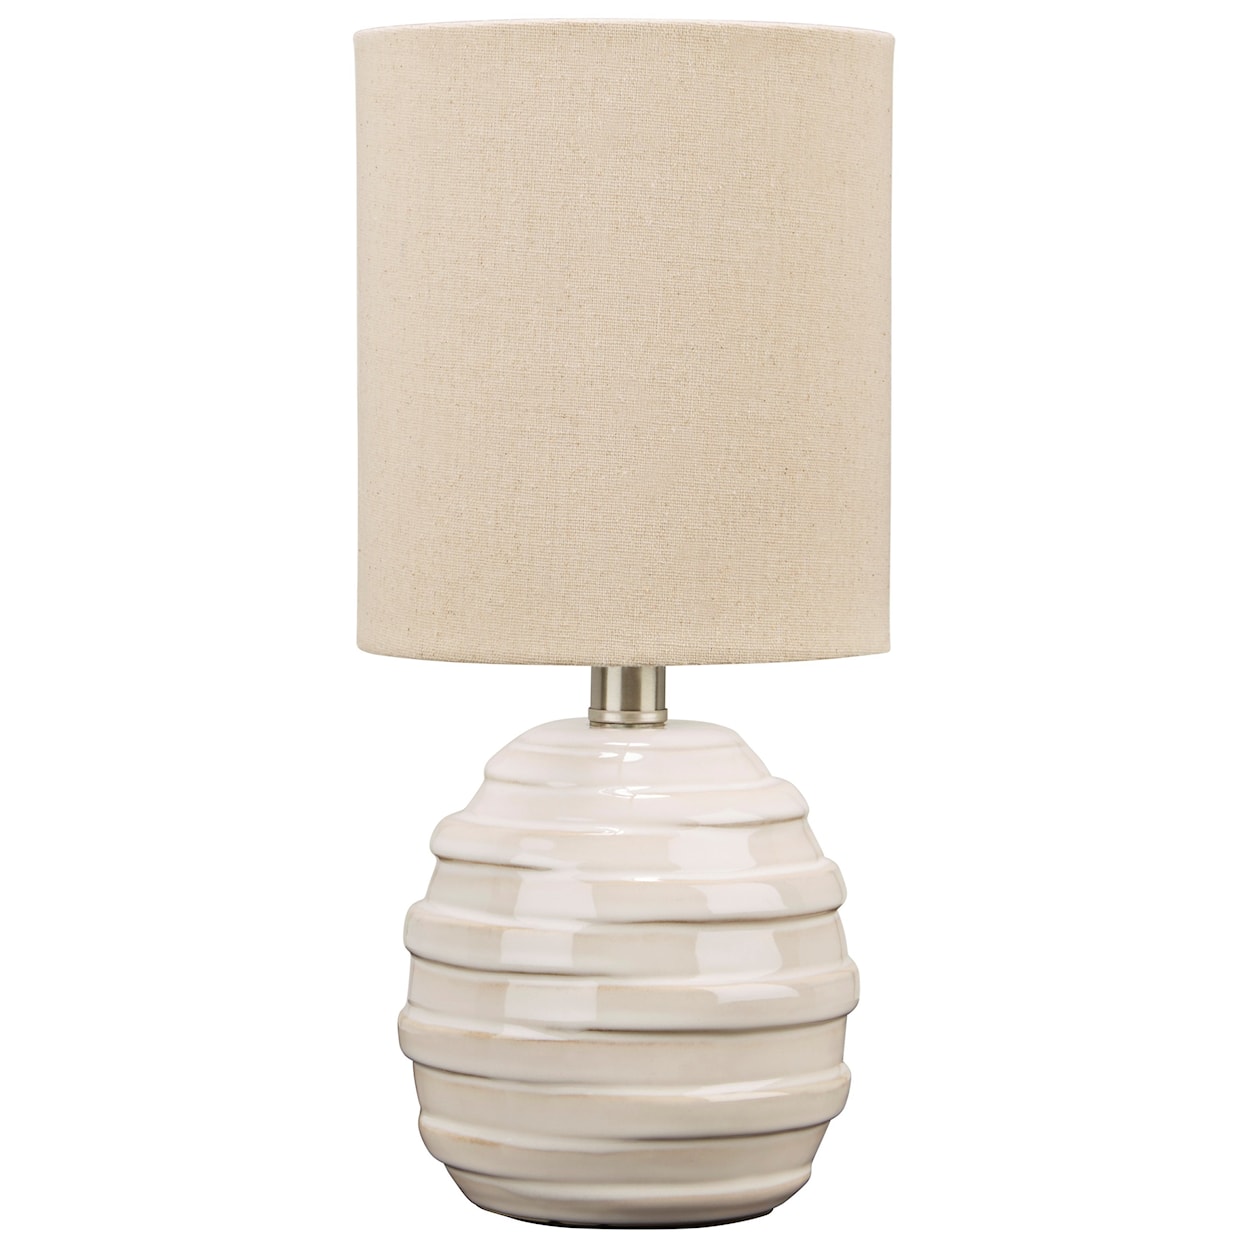 Ashley Furniture Signature Design Lamps - Casual Glennwick White Ceramic Table Lamp